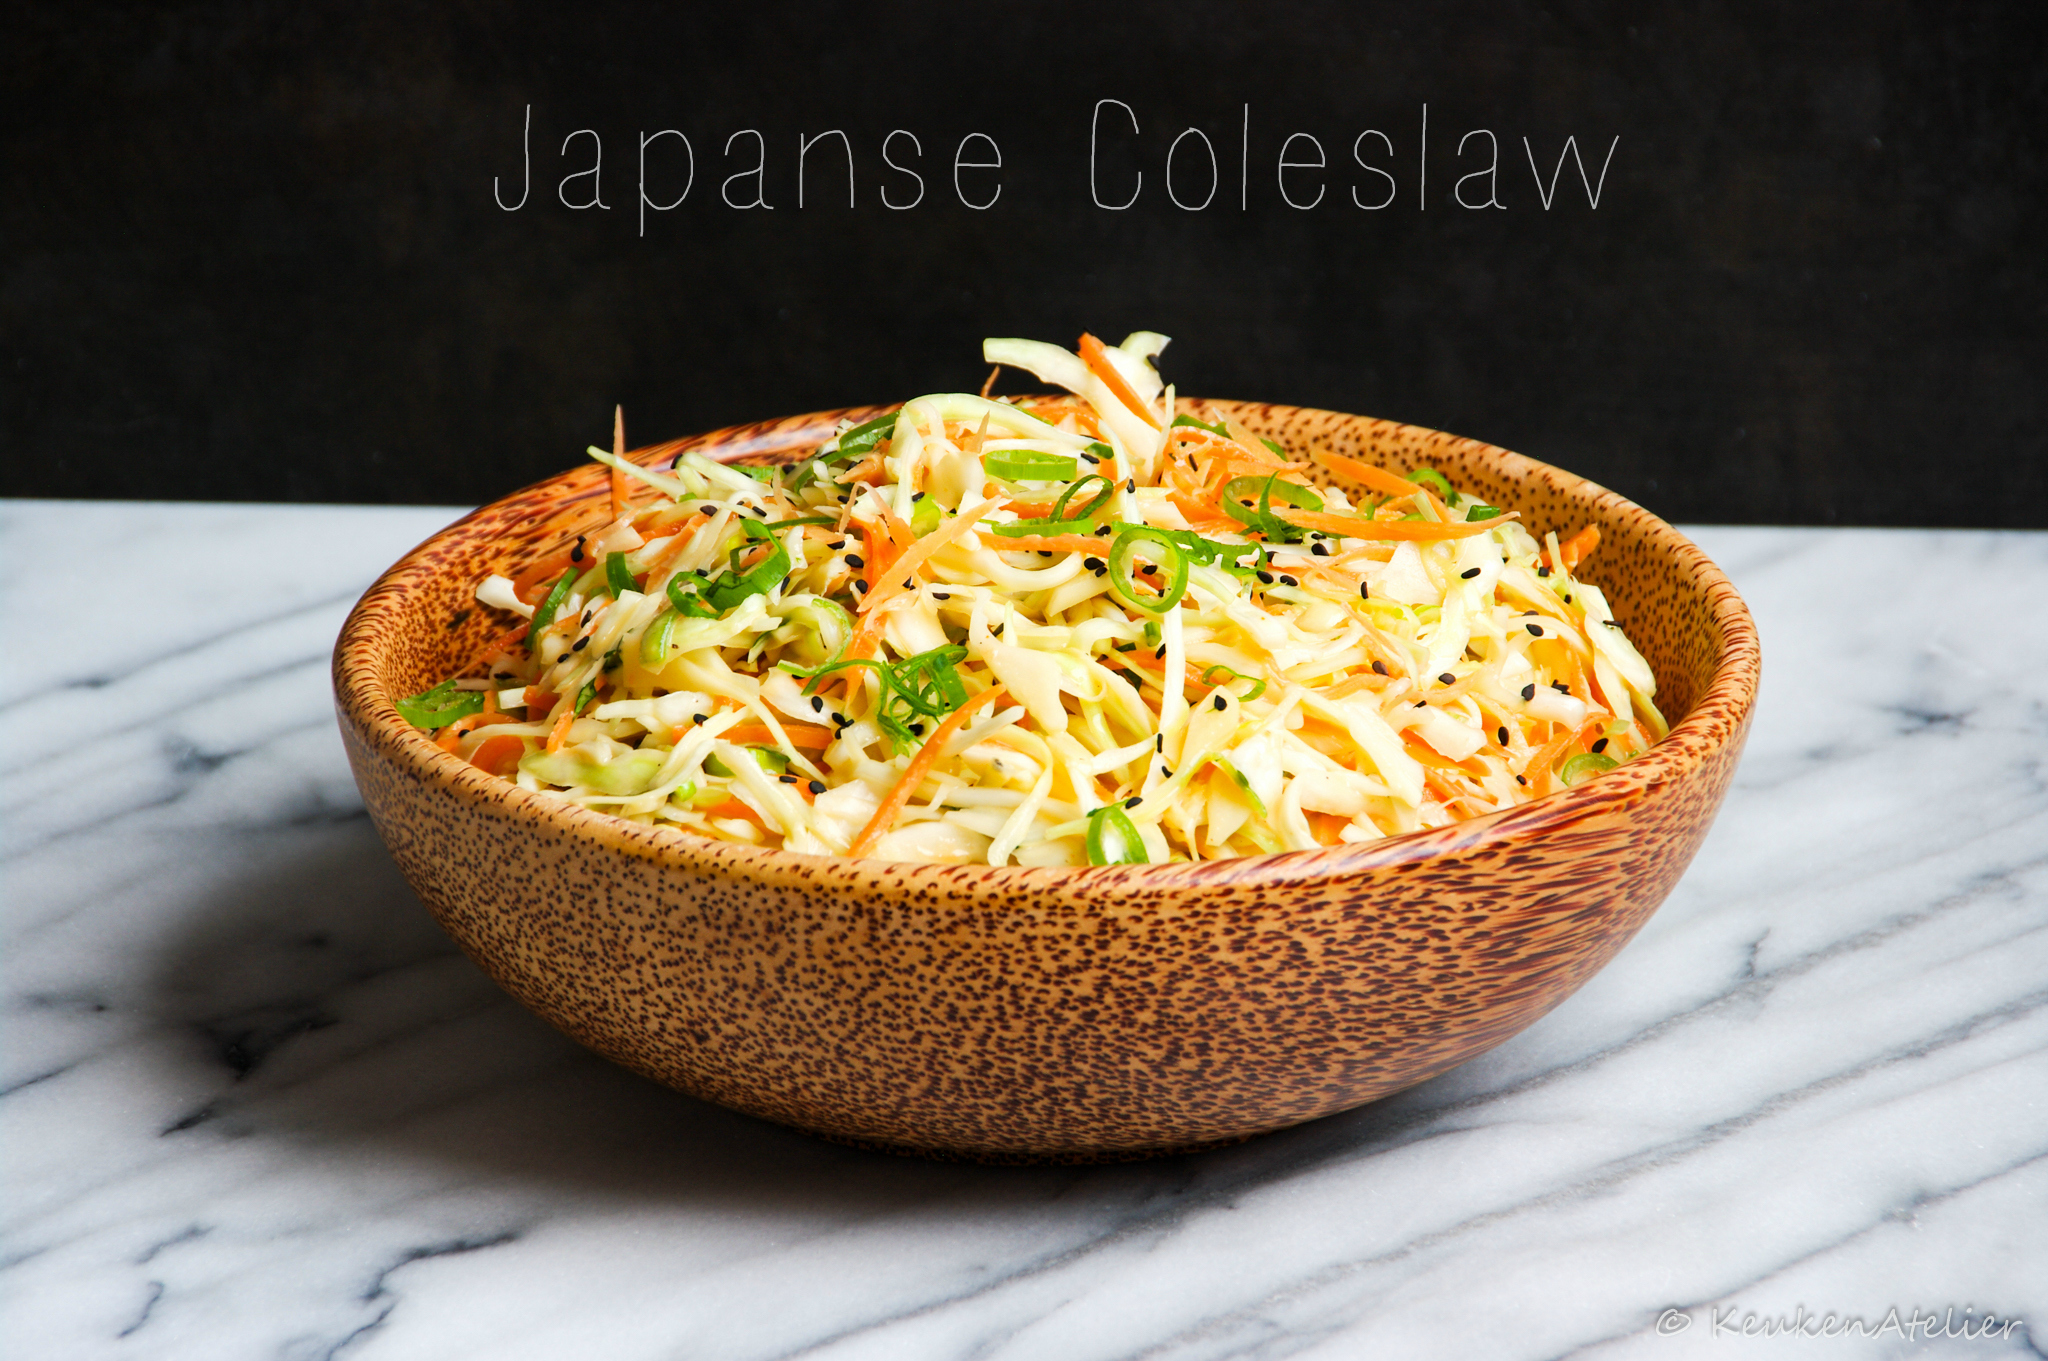 Japanse coleslaw